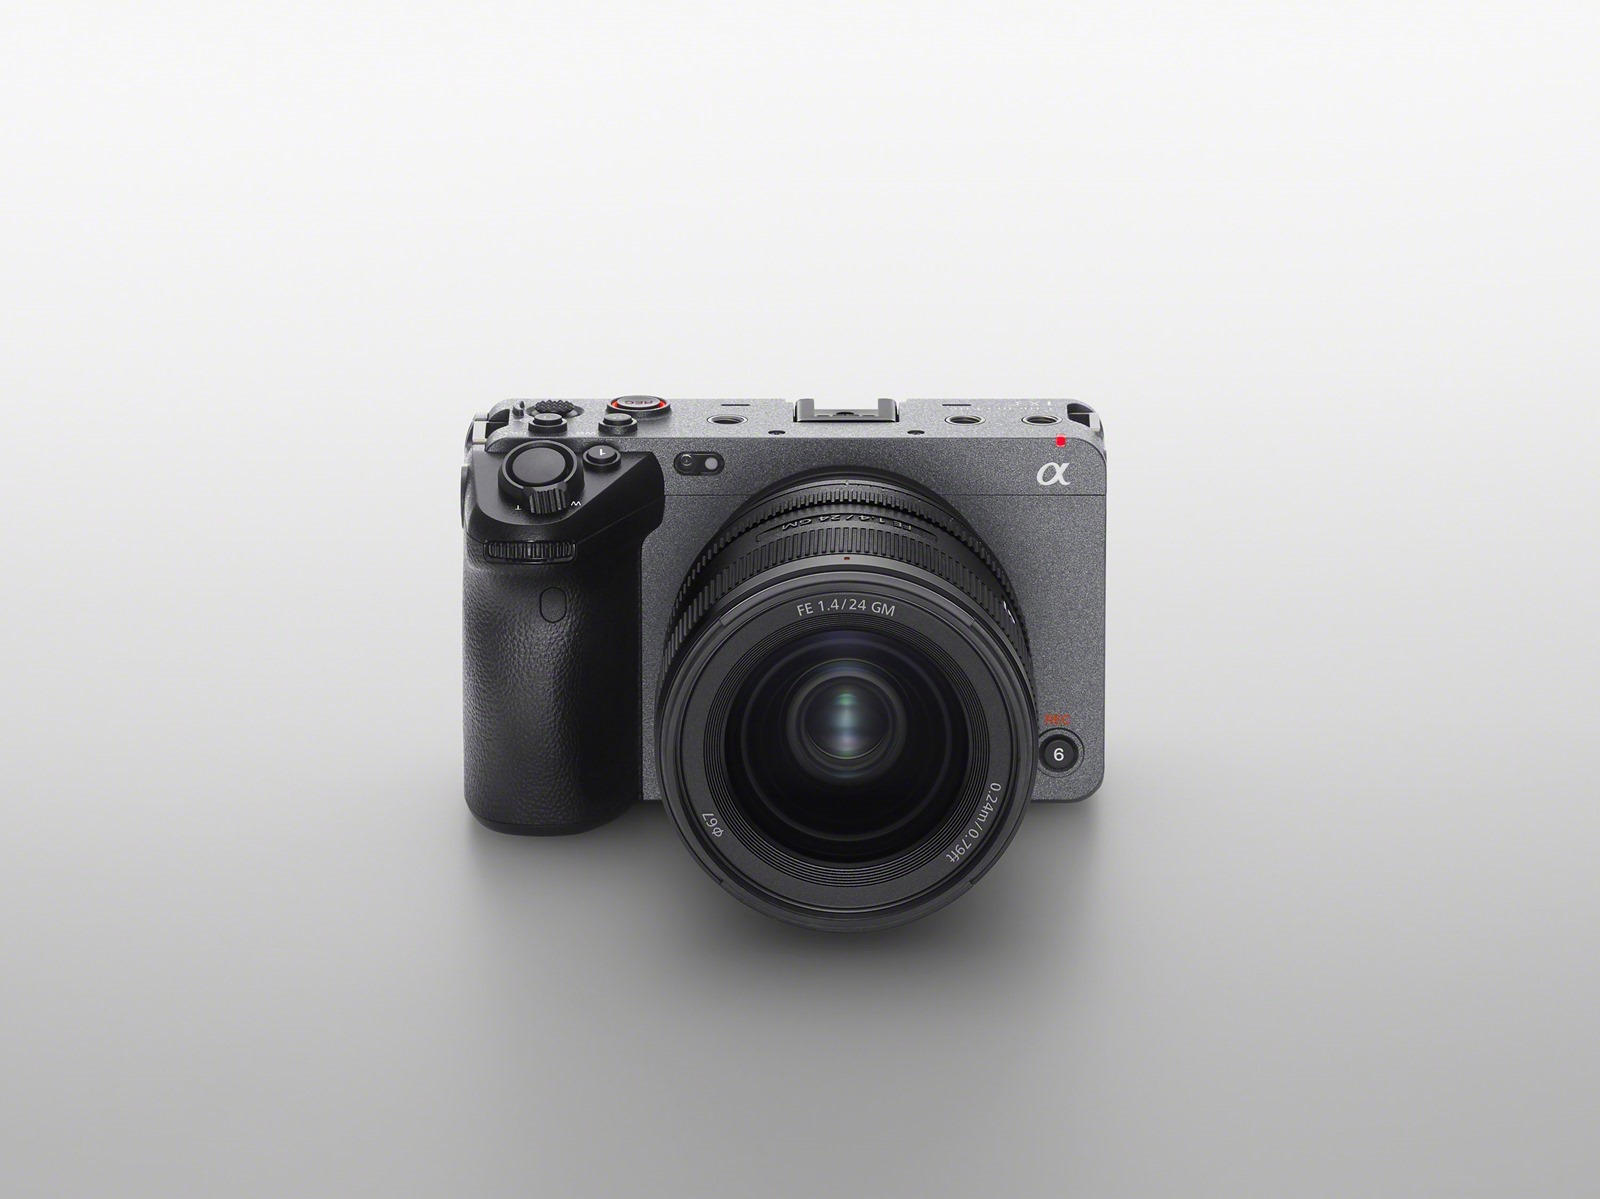 Sony Cinema Line 全片幅數位相機 FX3 專業級攝影機效能結合 &alpha; 系列相機對焦表現 輕巧體現電影風格影像 @3C 達人廖阿輝